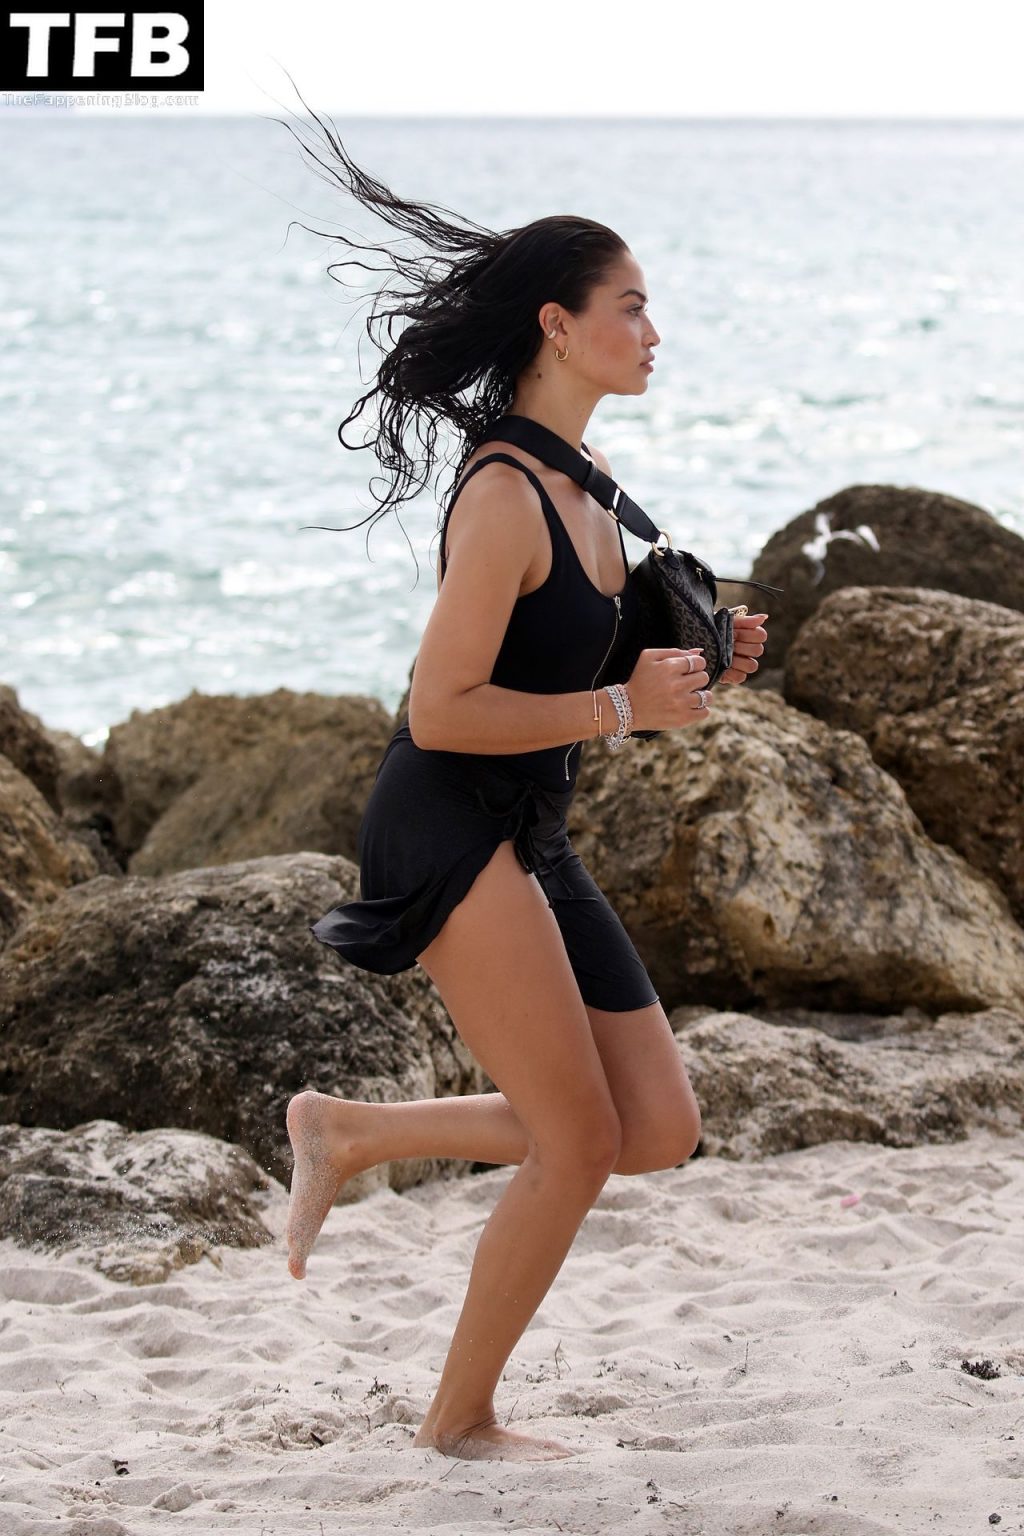 Shanina Shaik Looks Hot During a Shoot on the Beach in Miami (28 Photos)